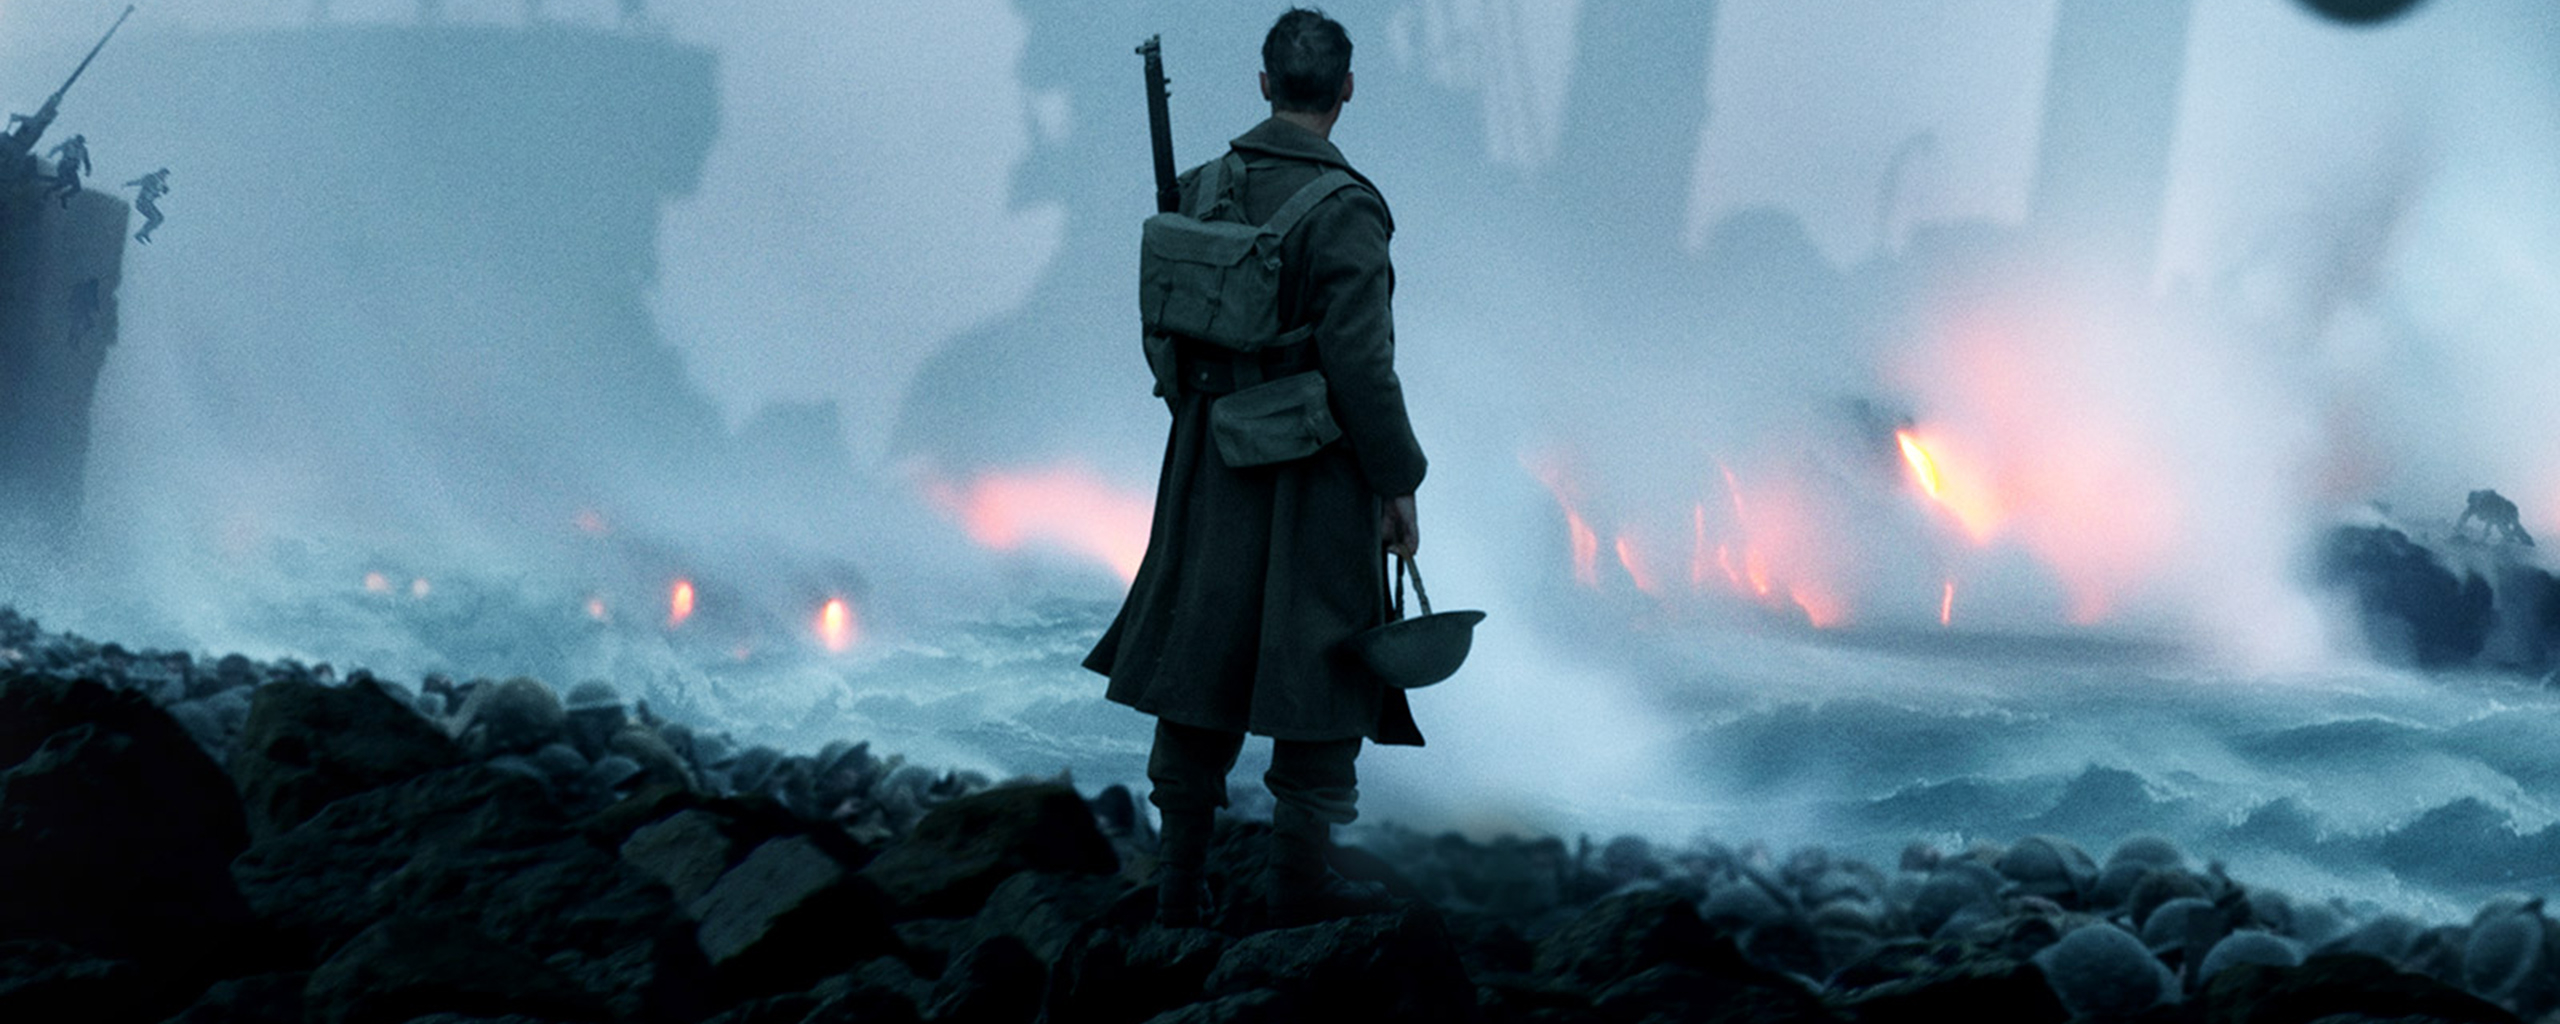 Dunkirk Movie Poster, Full HD 2K Wallpaper